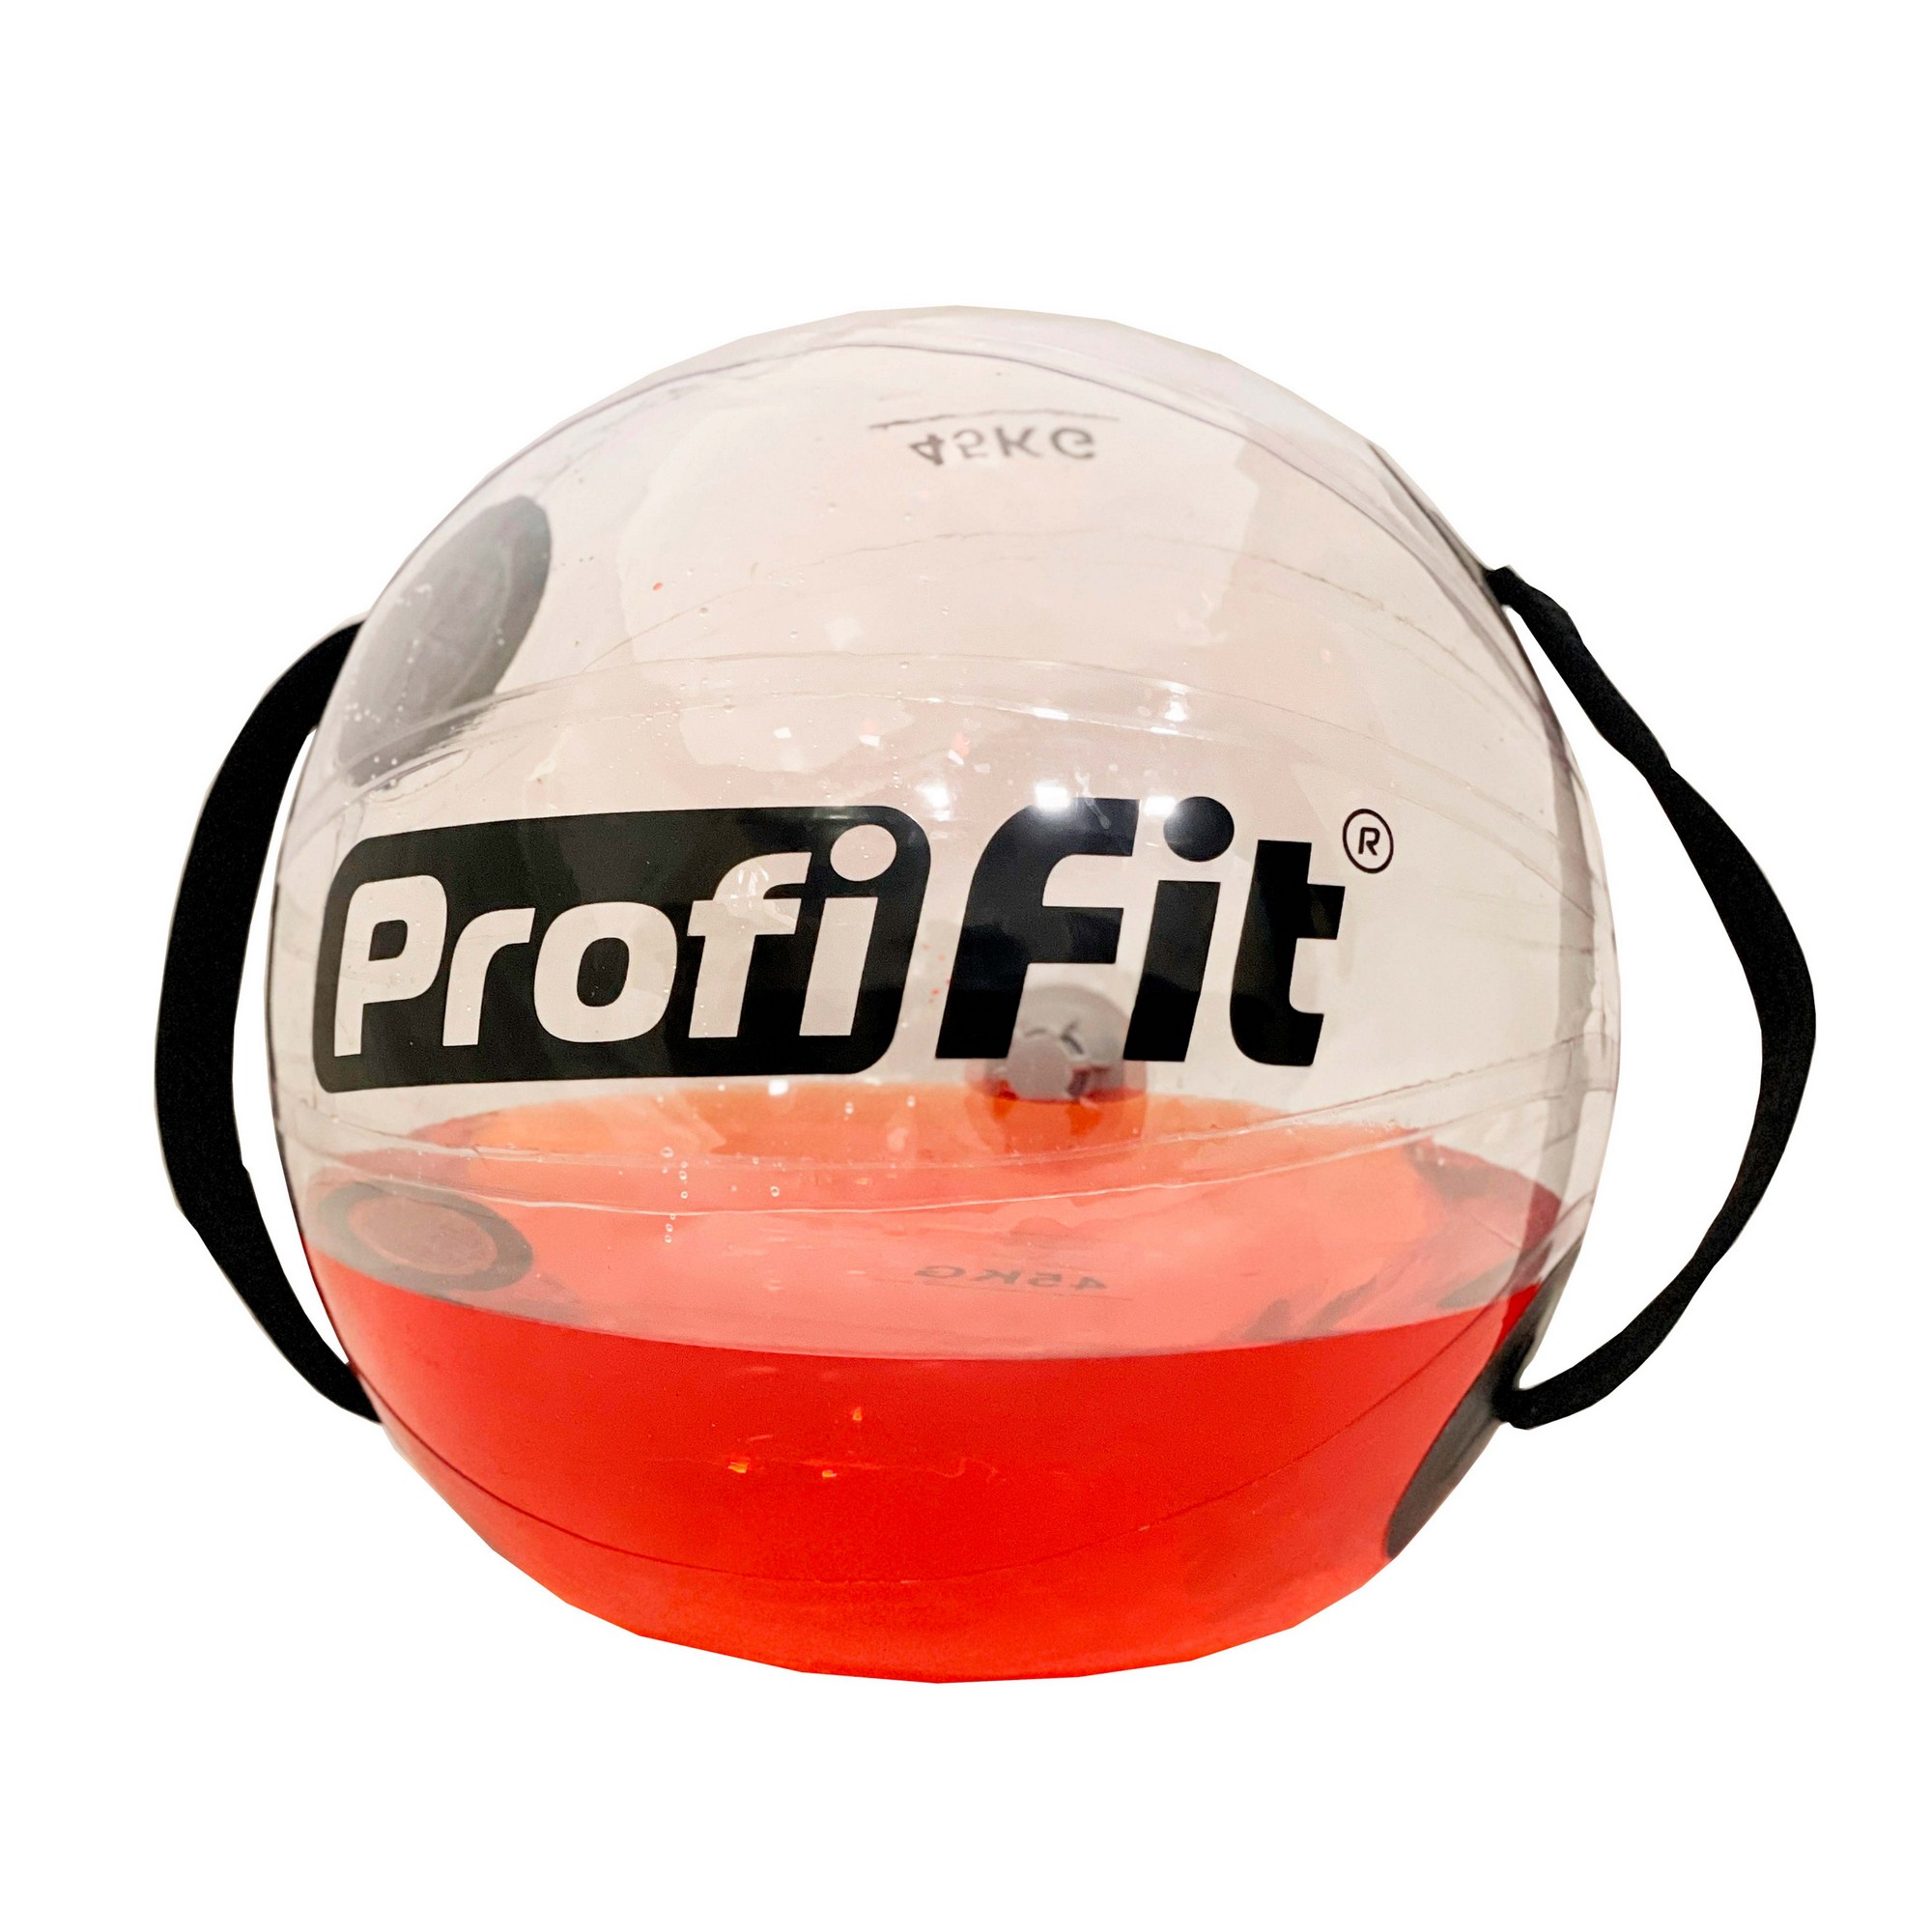     Profi-Fit Water Ball d50 